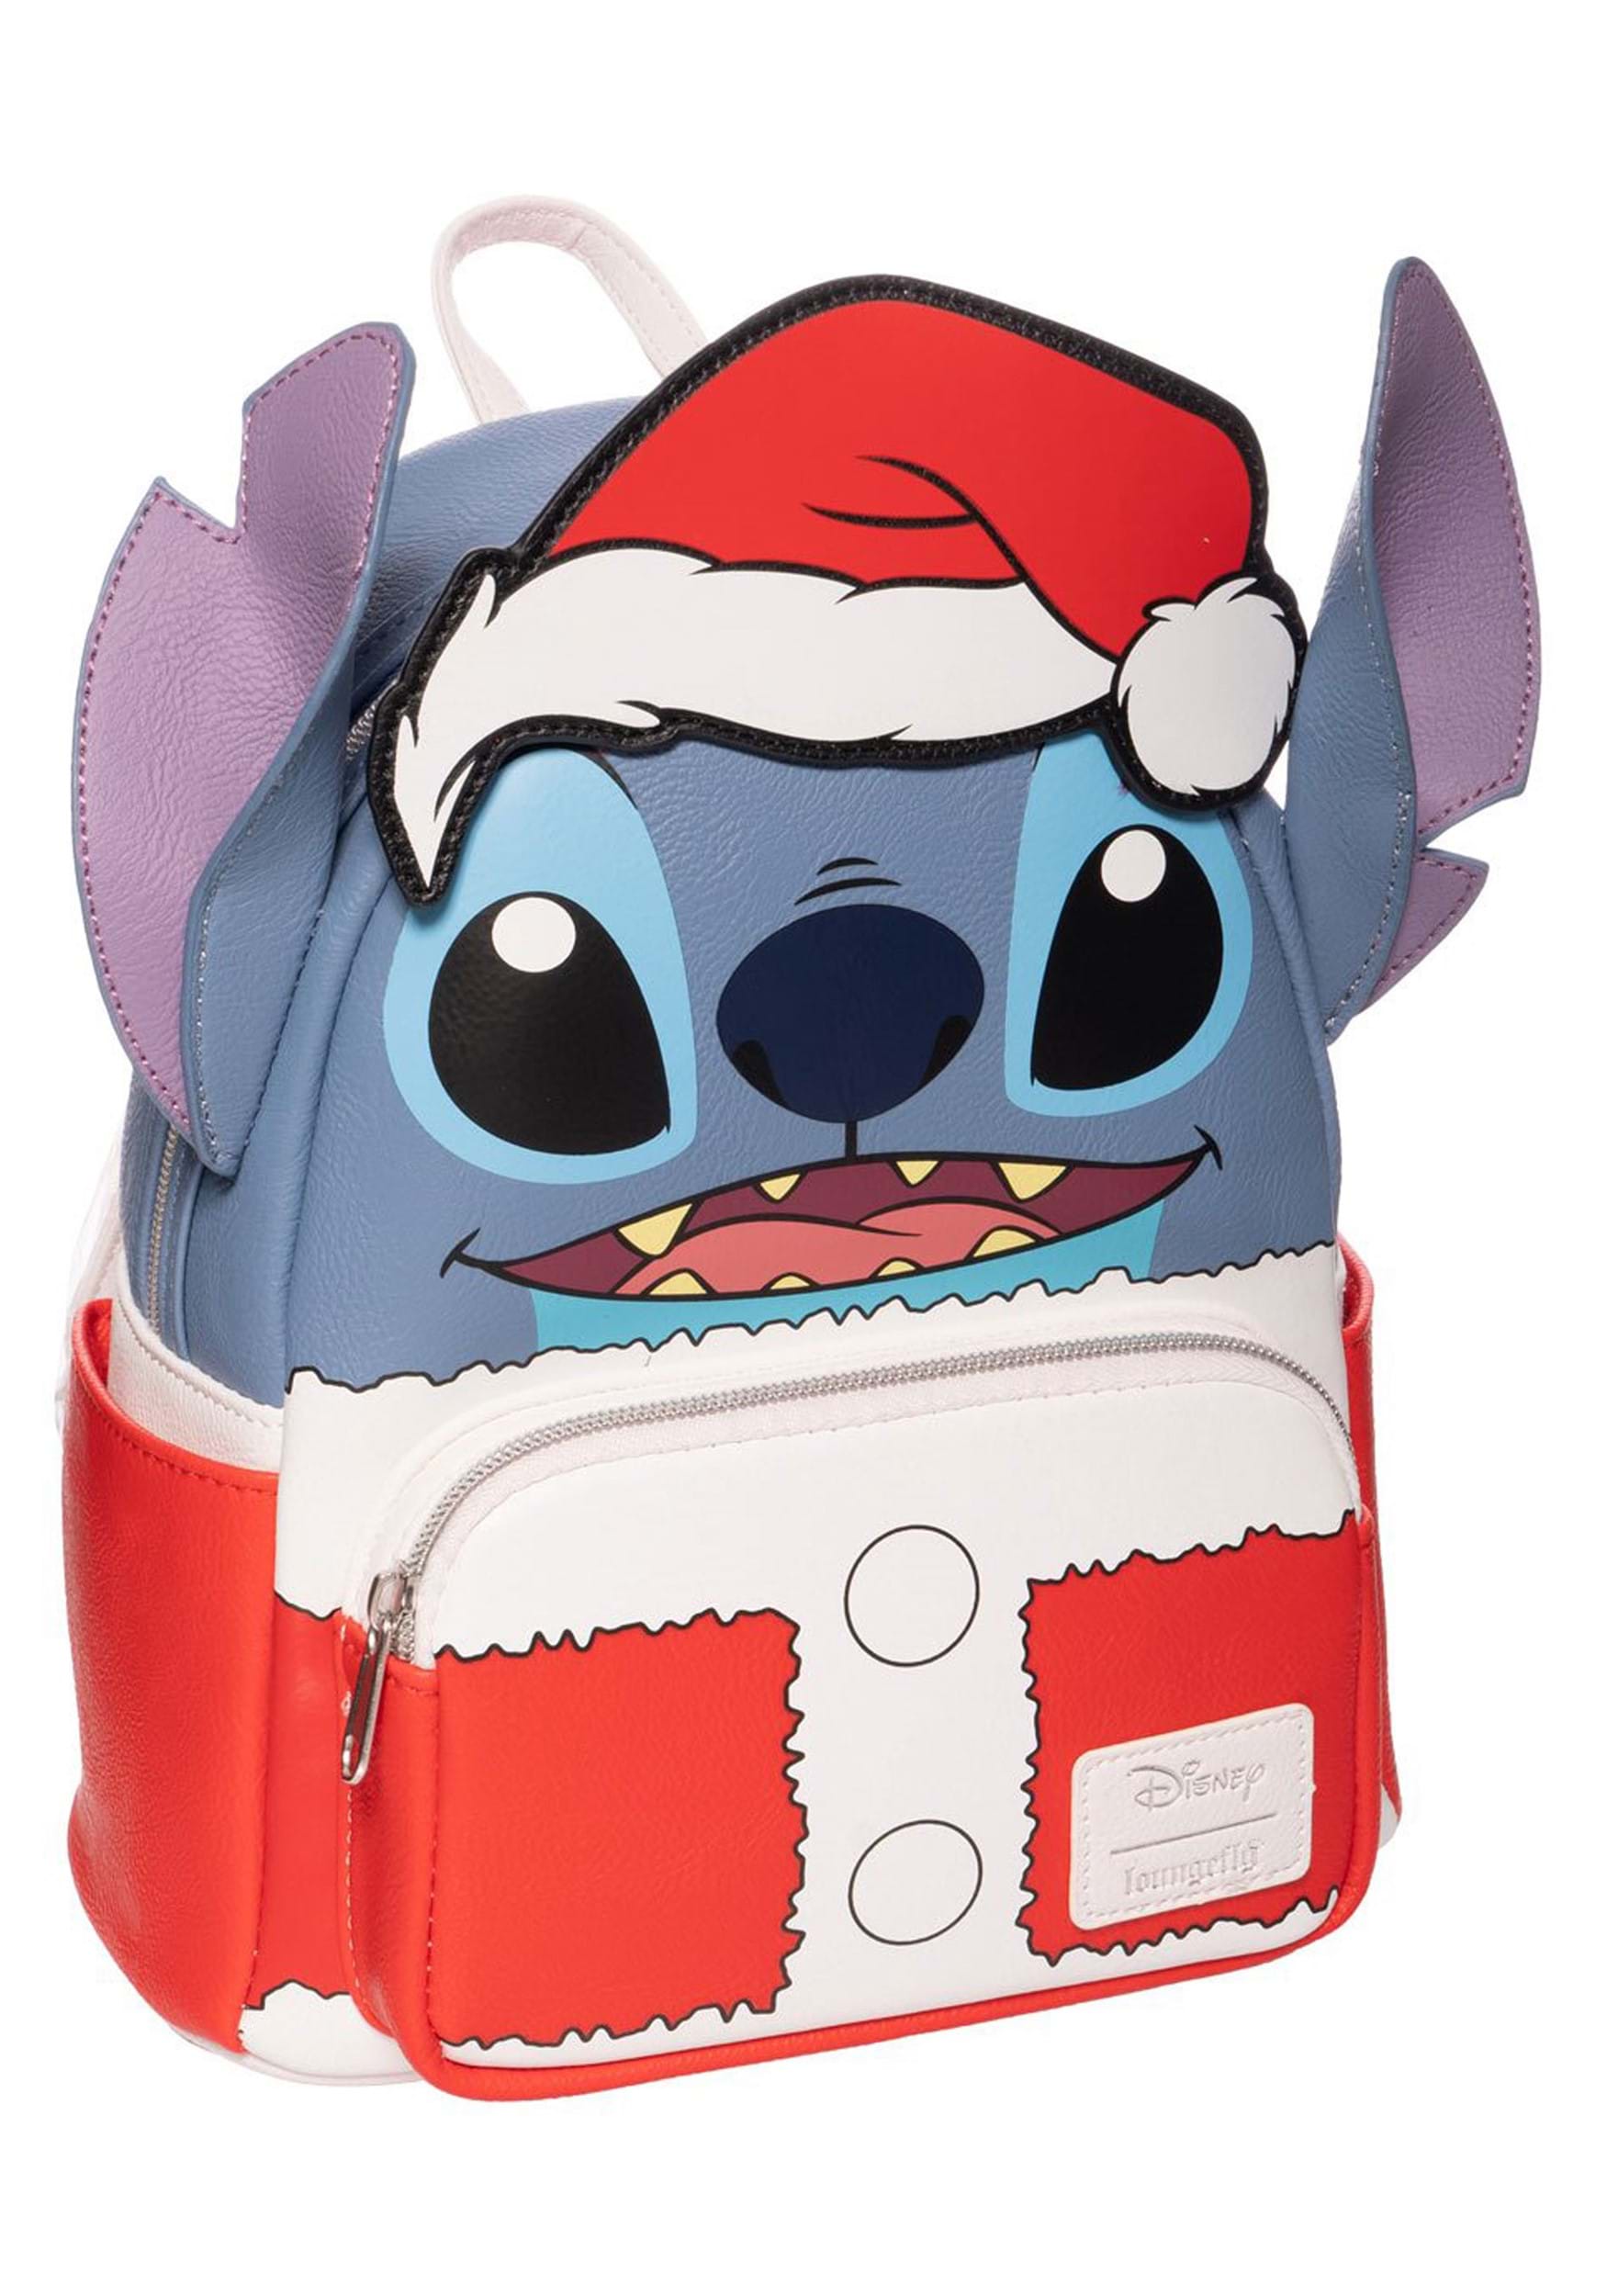 Loungefly Disney Stitch Mini Backpack